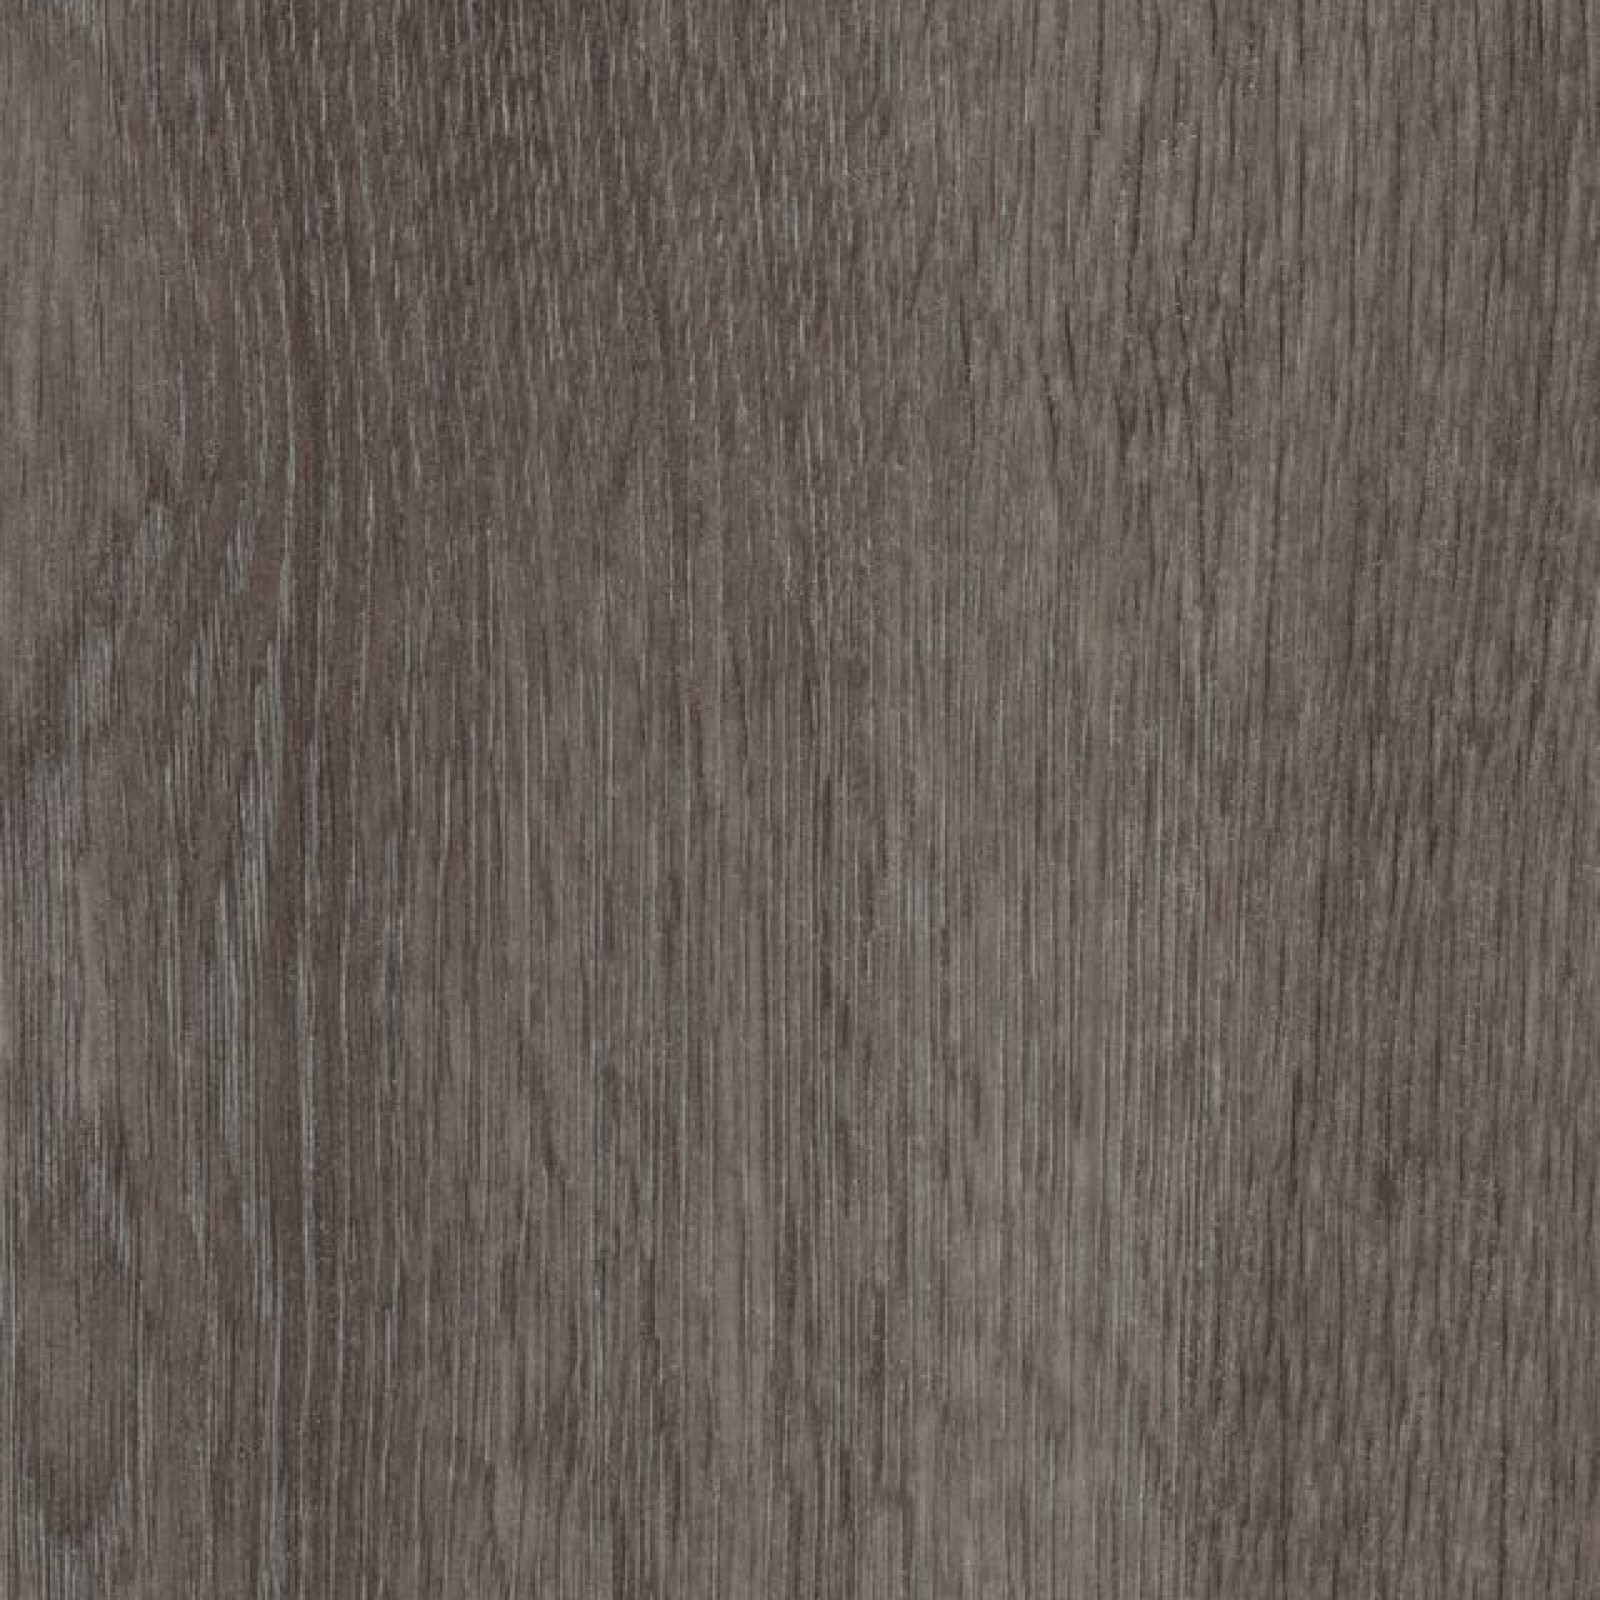 Vzor - 60375CL5 grey collage oak